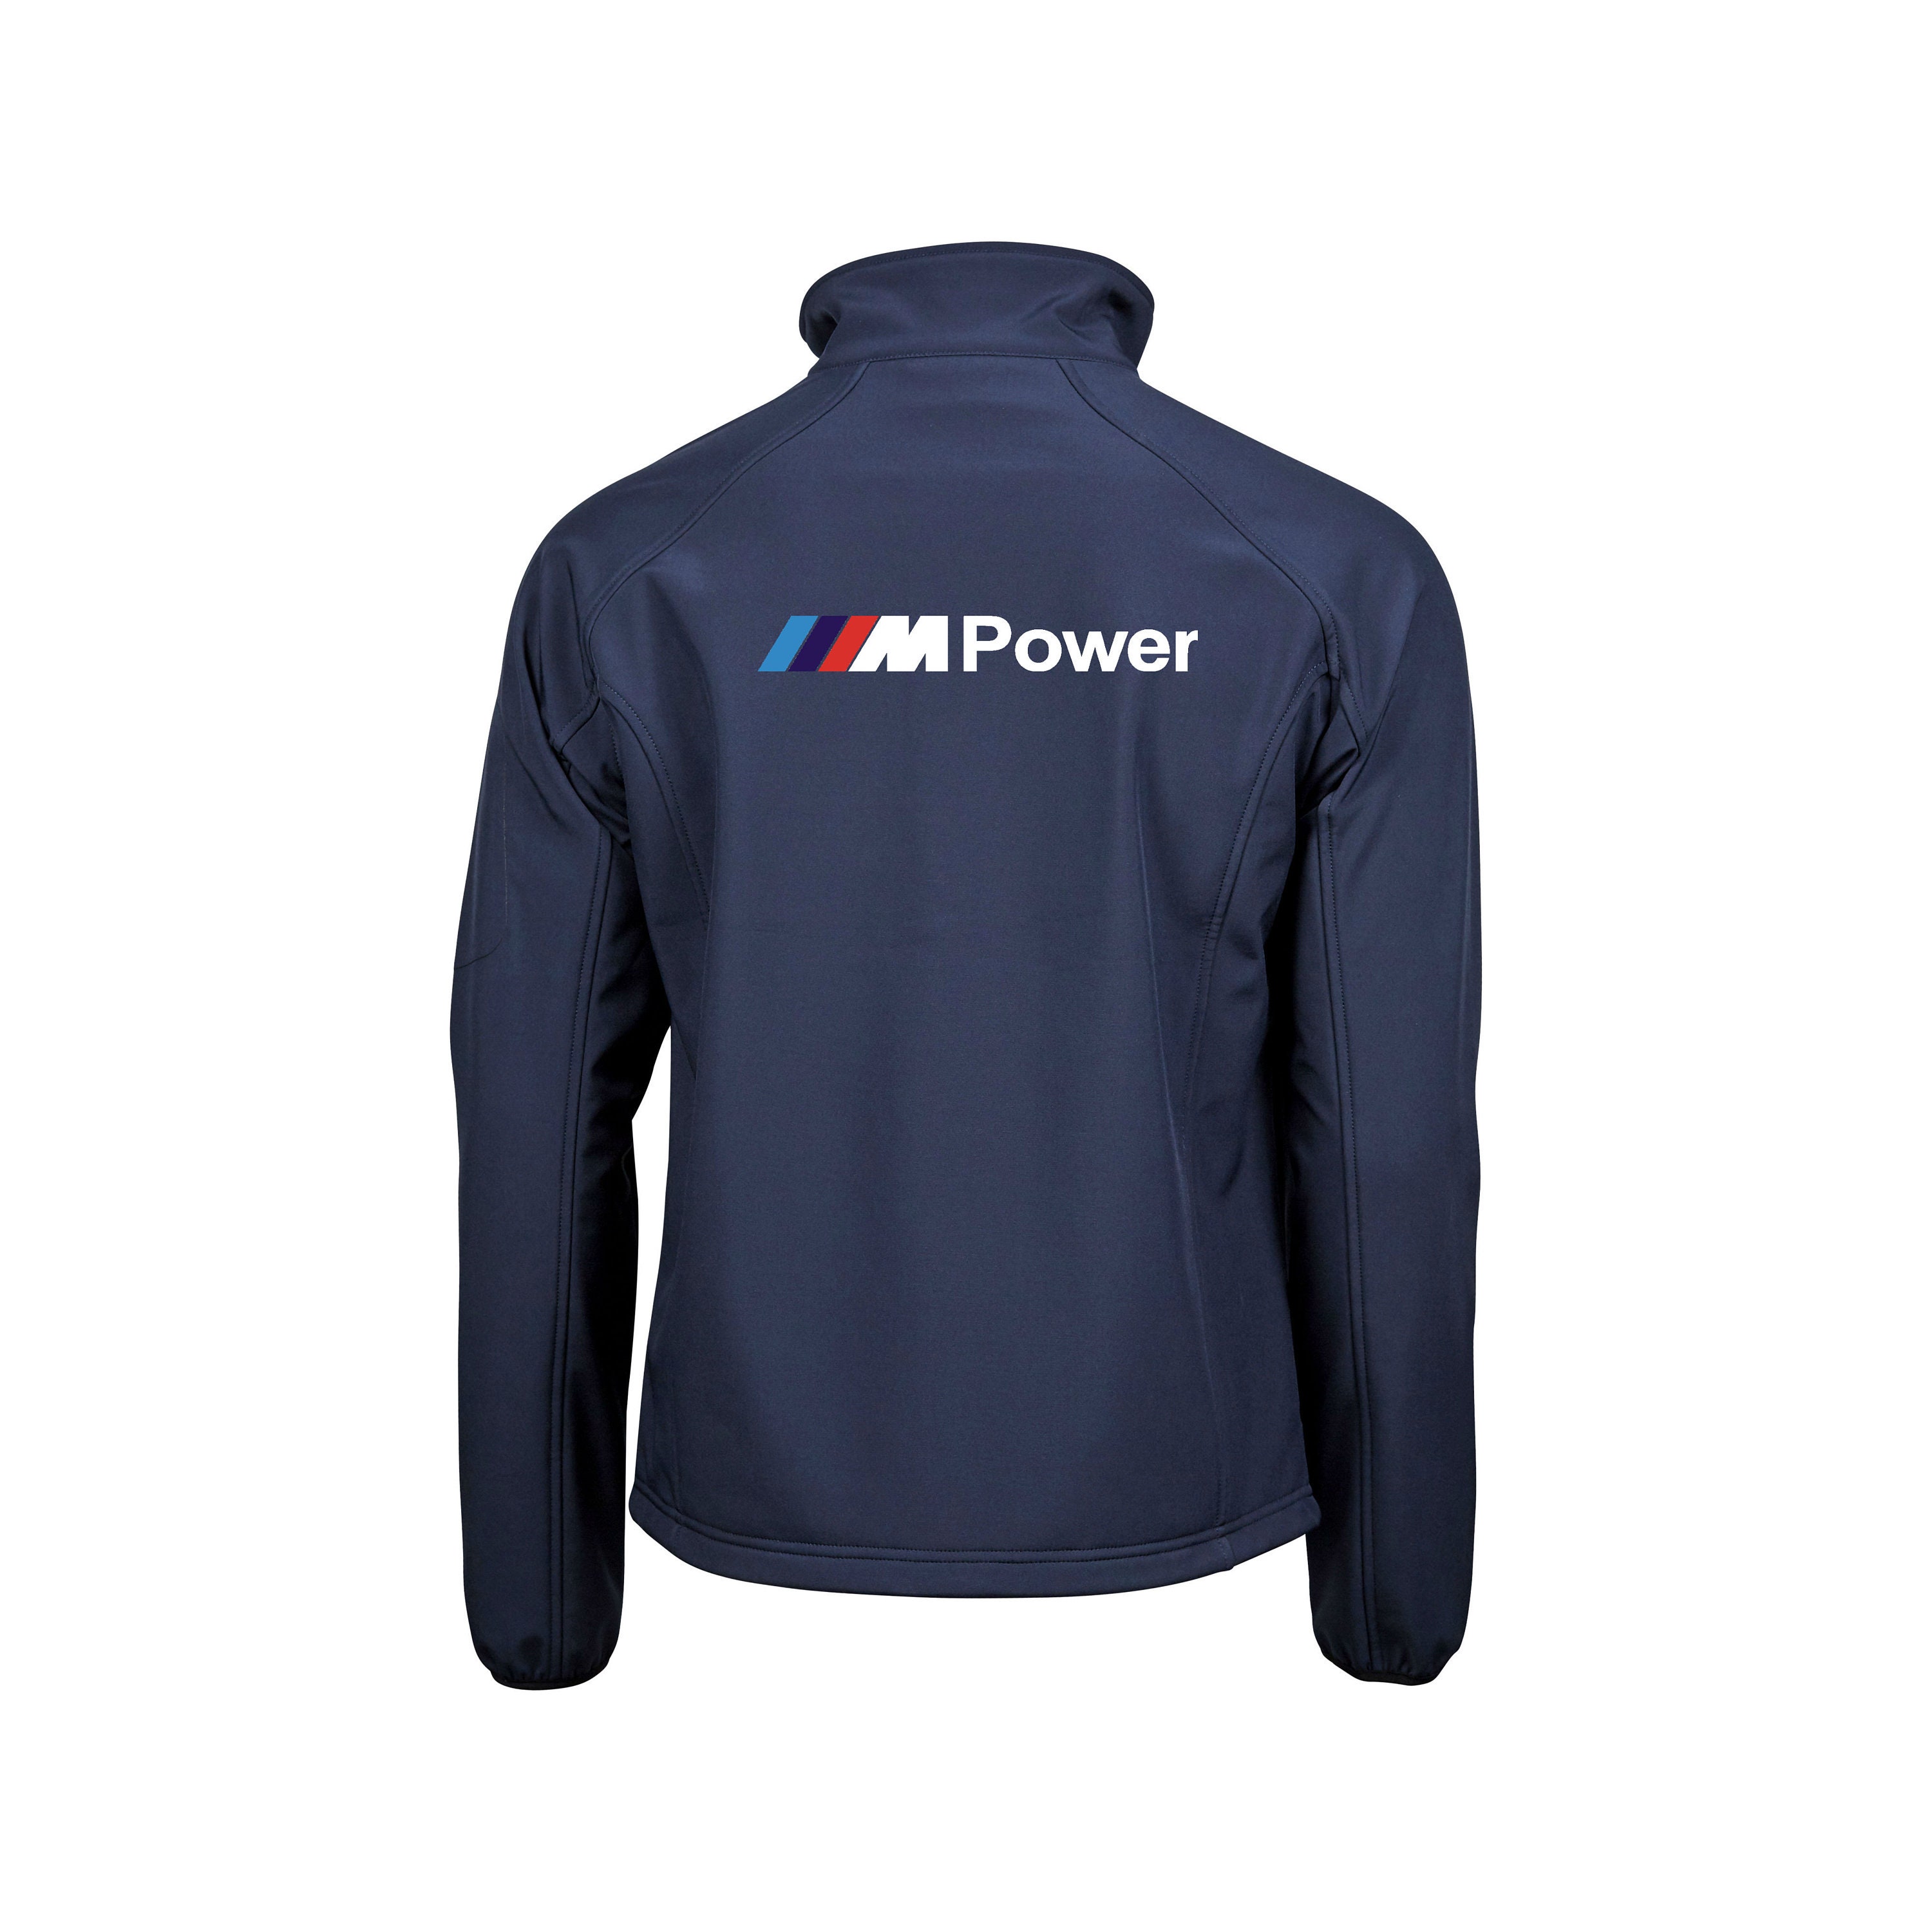 BMW Mpower Men's Softshell Jacket Windproof Water - Etsy